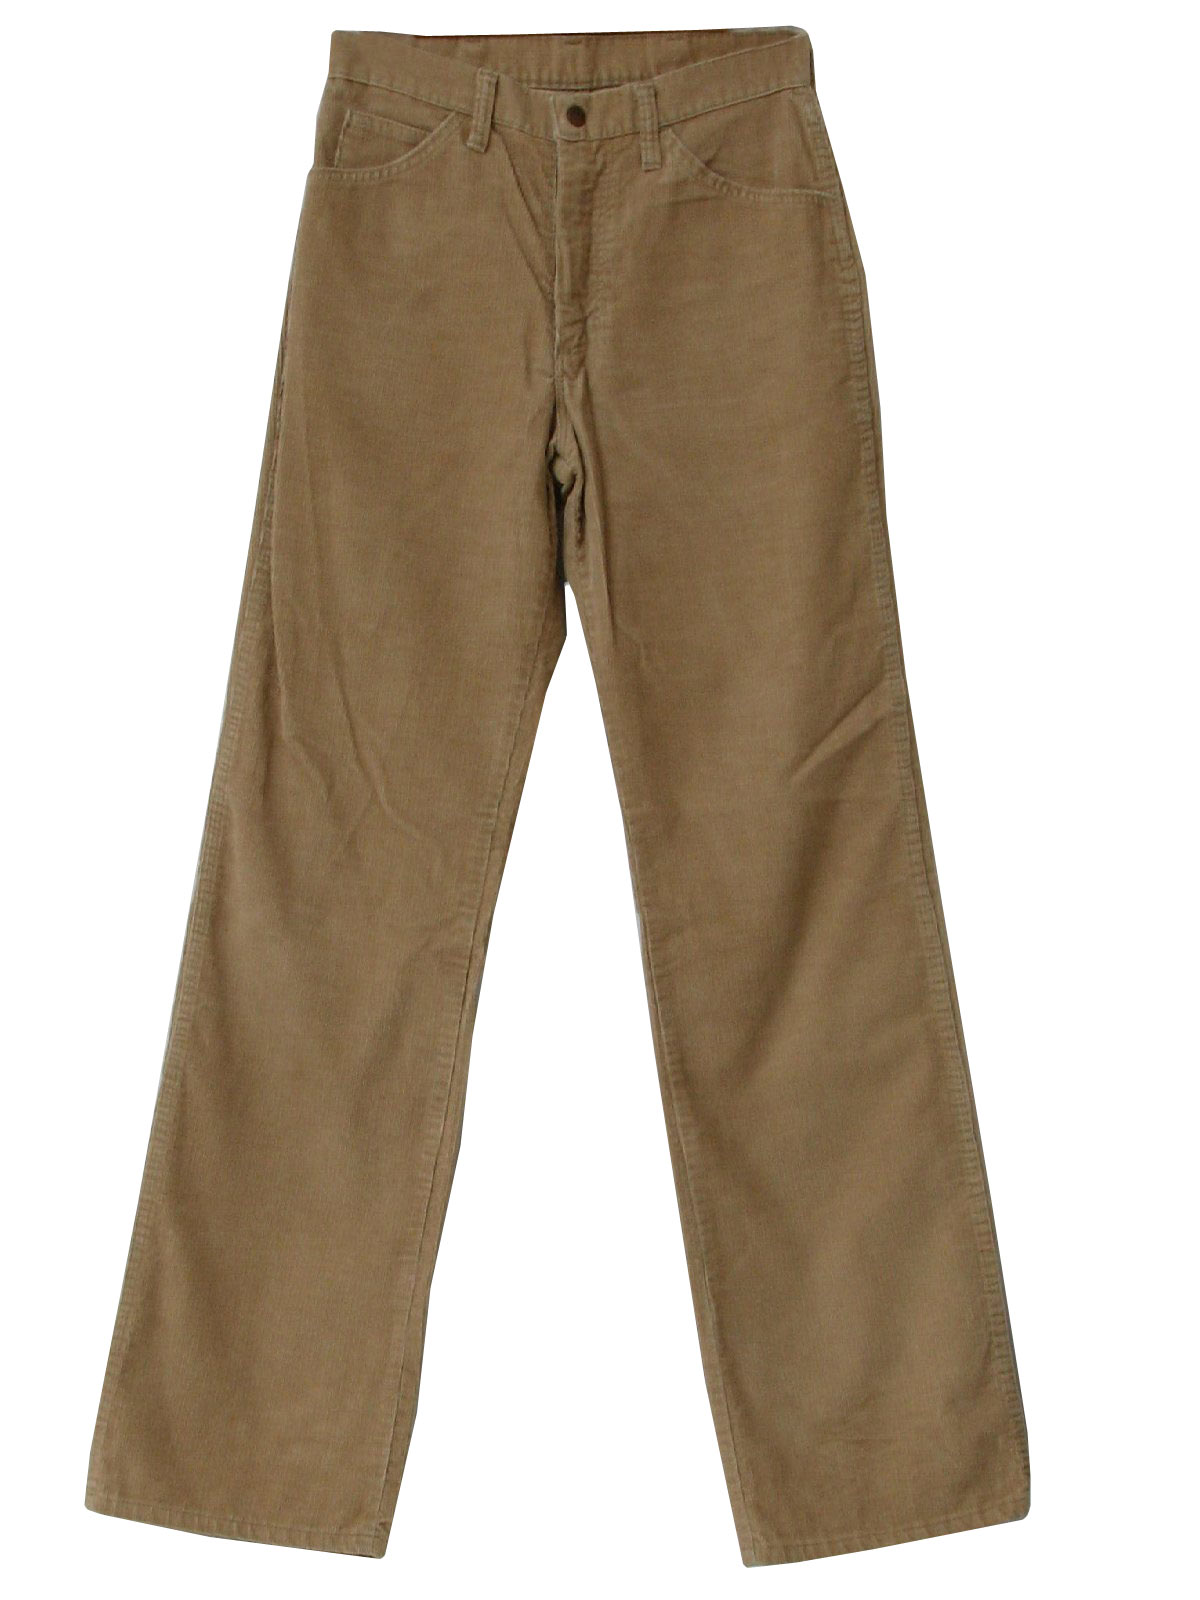 Eighties Wrangler Pants: 80s -Wrangler- Mens tan cotton corduroy ...